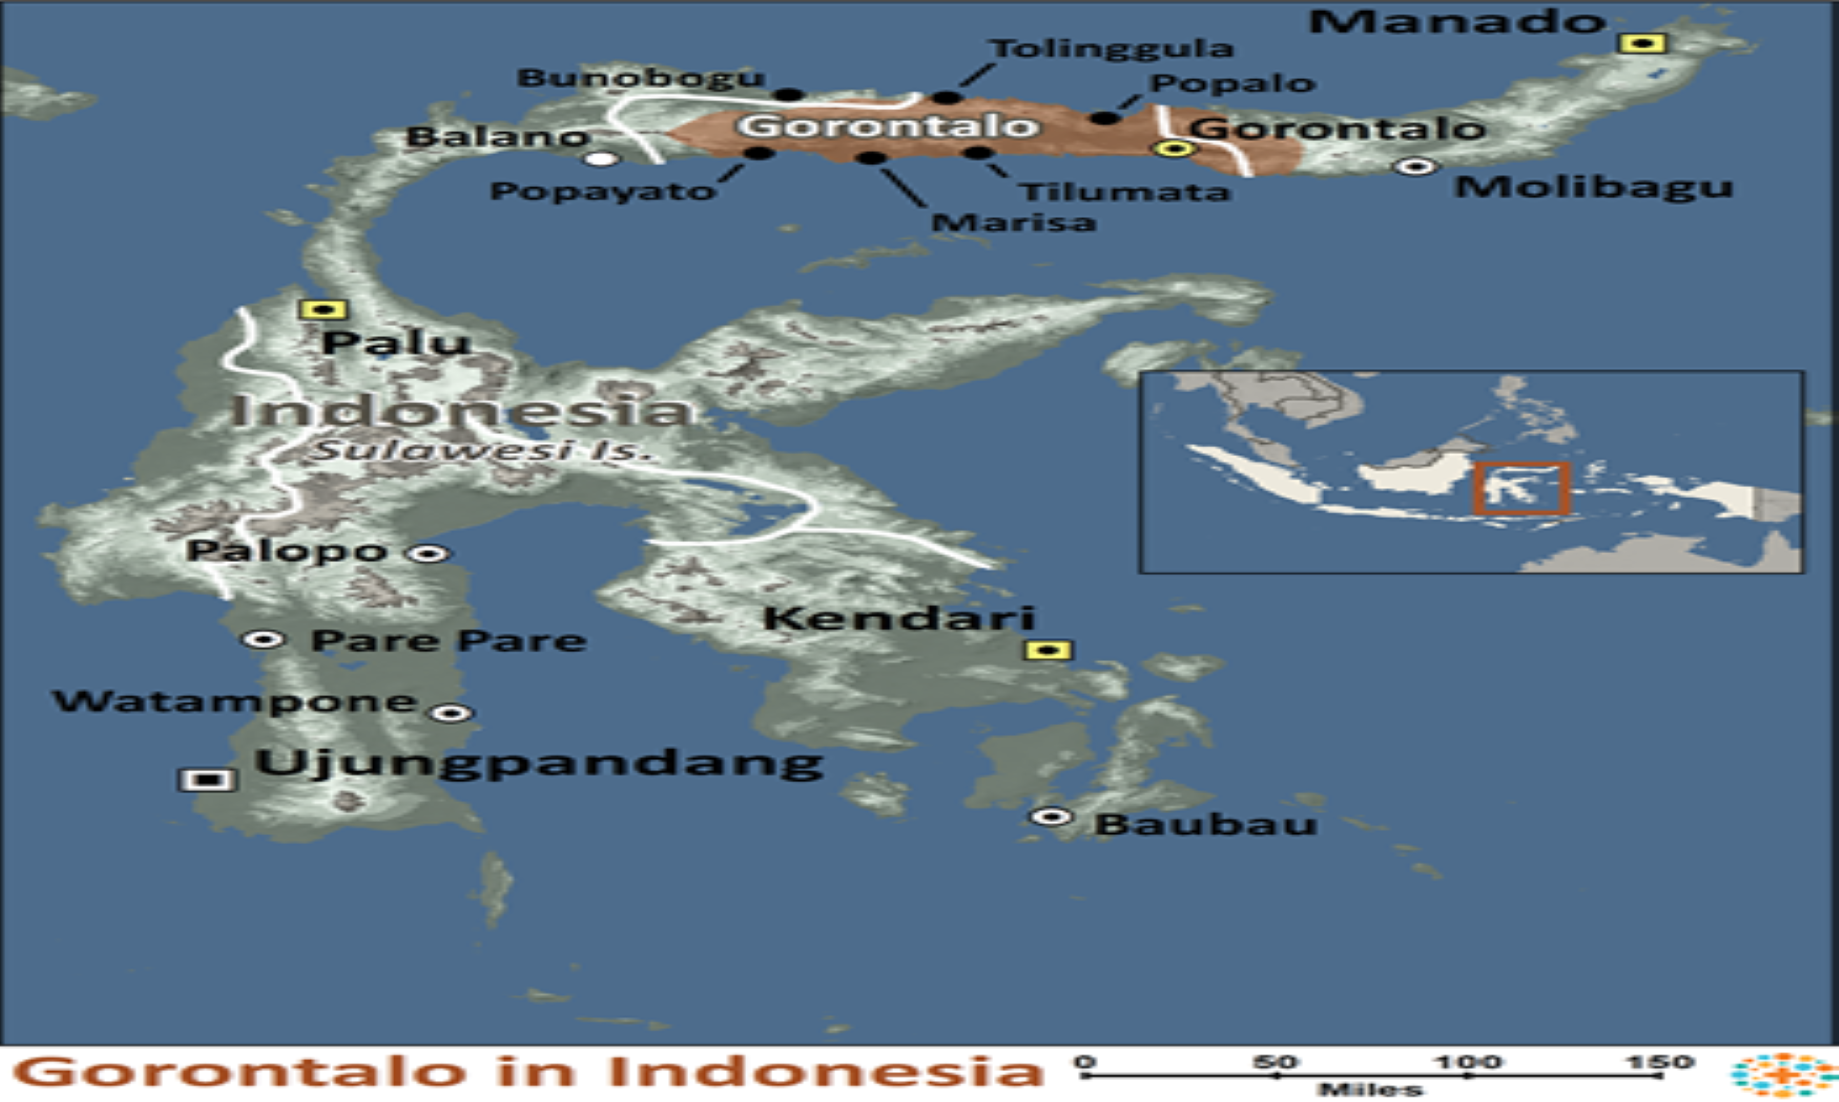 6.3-Magnitude Quake Jolted Indonesia’s Gorontalo, No Damage Reported